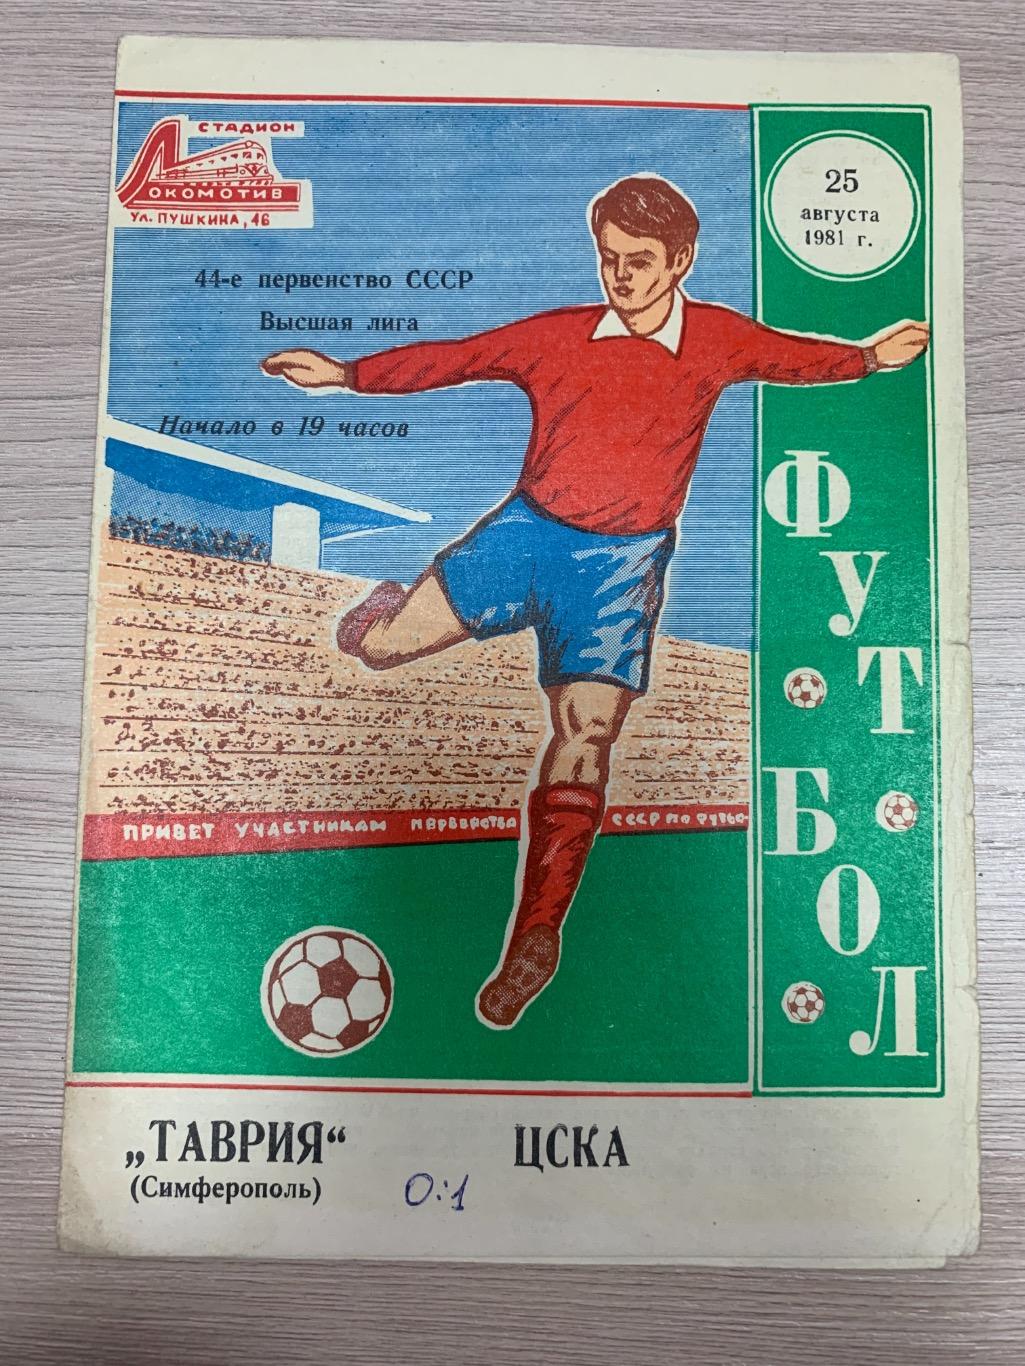 Таврия (Симферополь) - ЦСКА (Москва) 25.08.1981